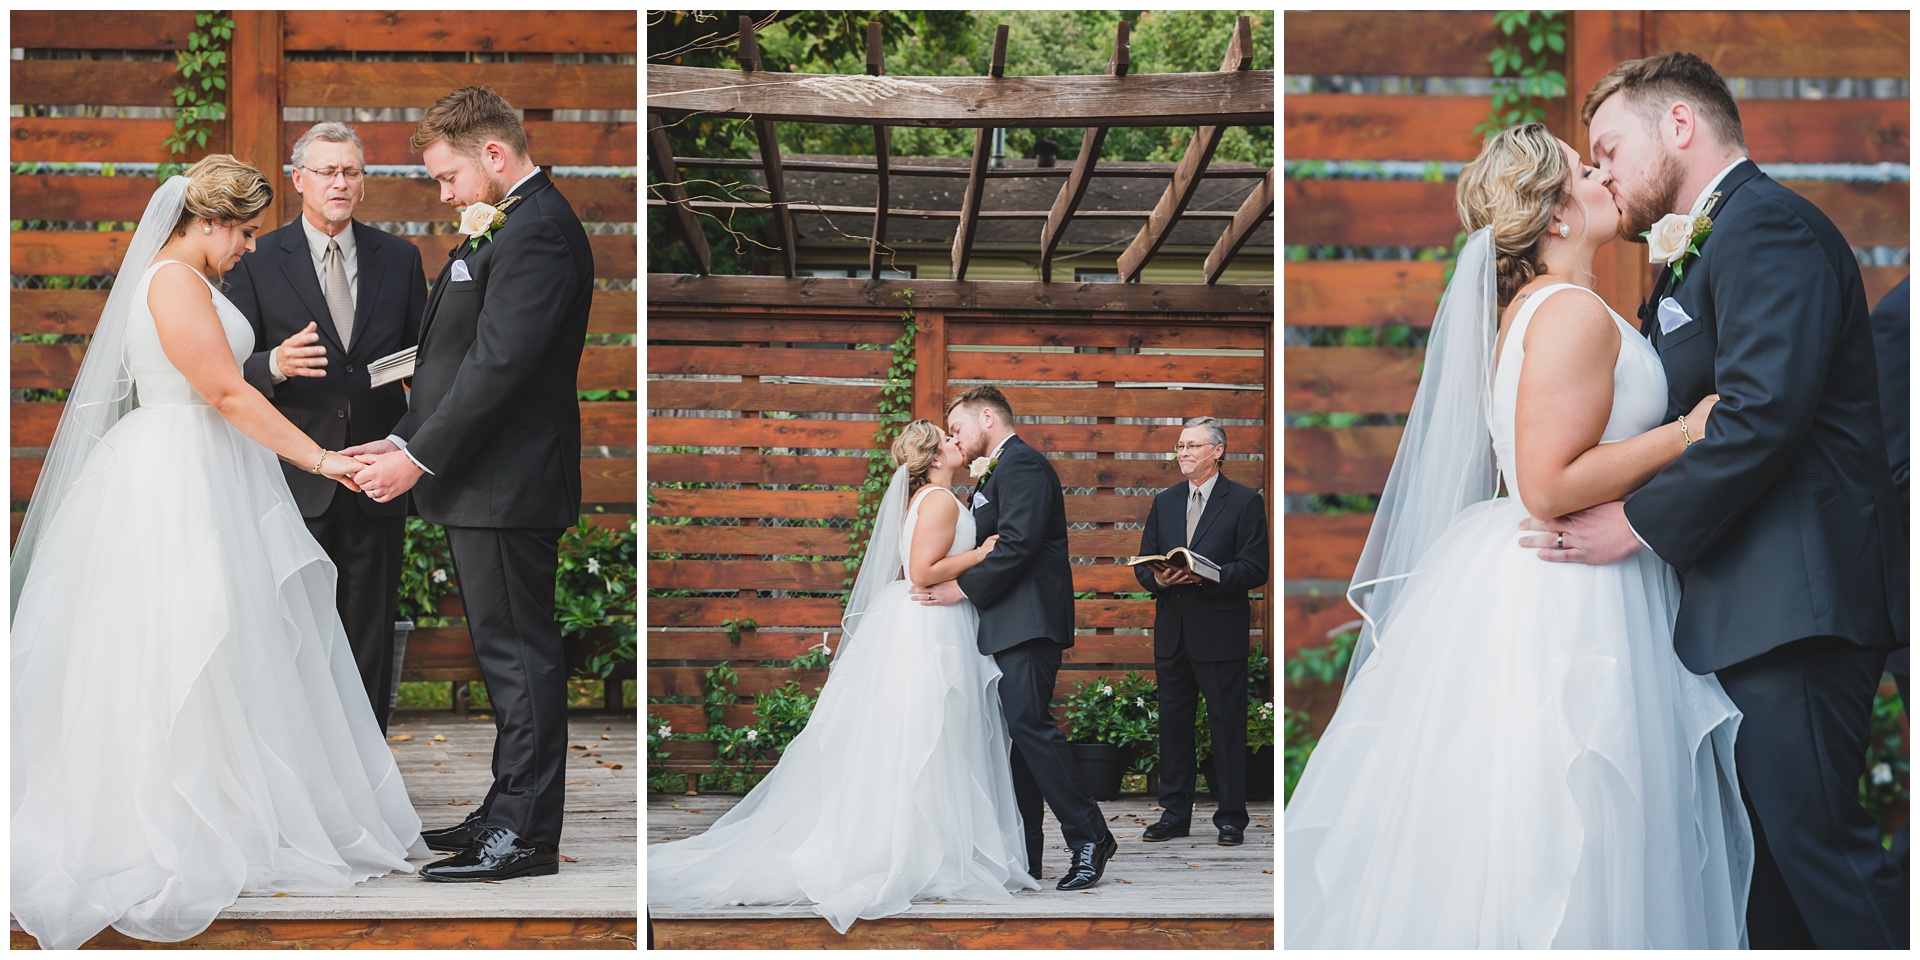 Wedding photography at The Magnolia Brookside by Kansas City wedding photographers Wisdom-Watson Weddings.